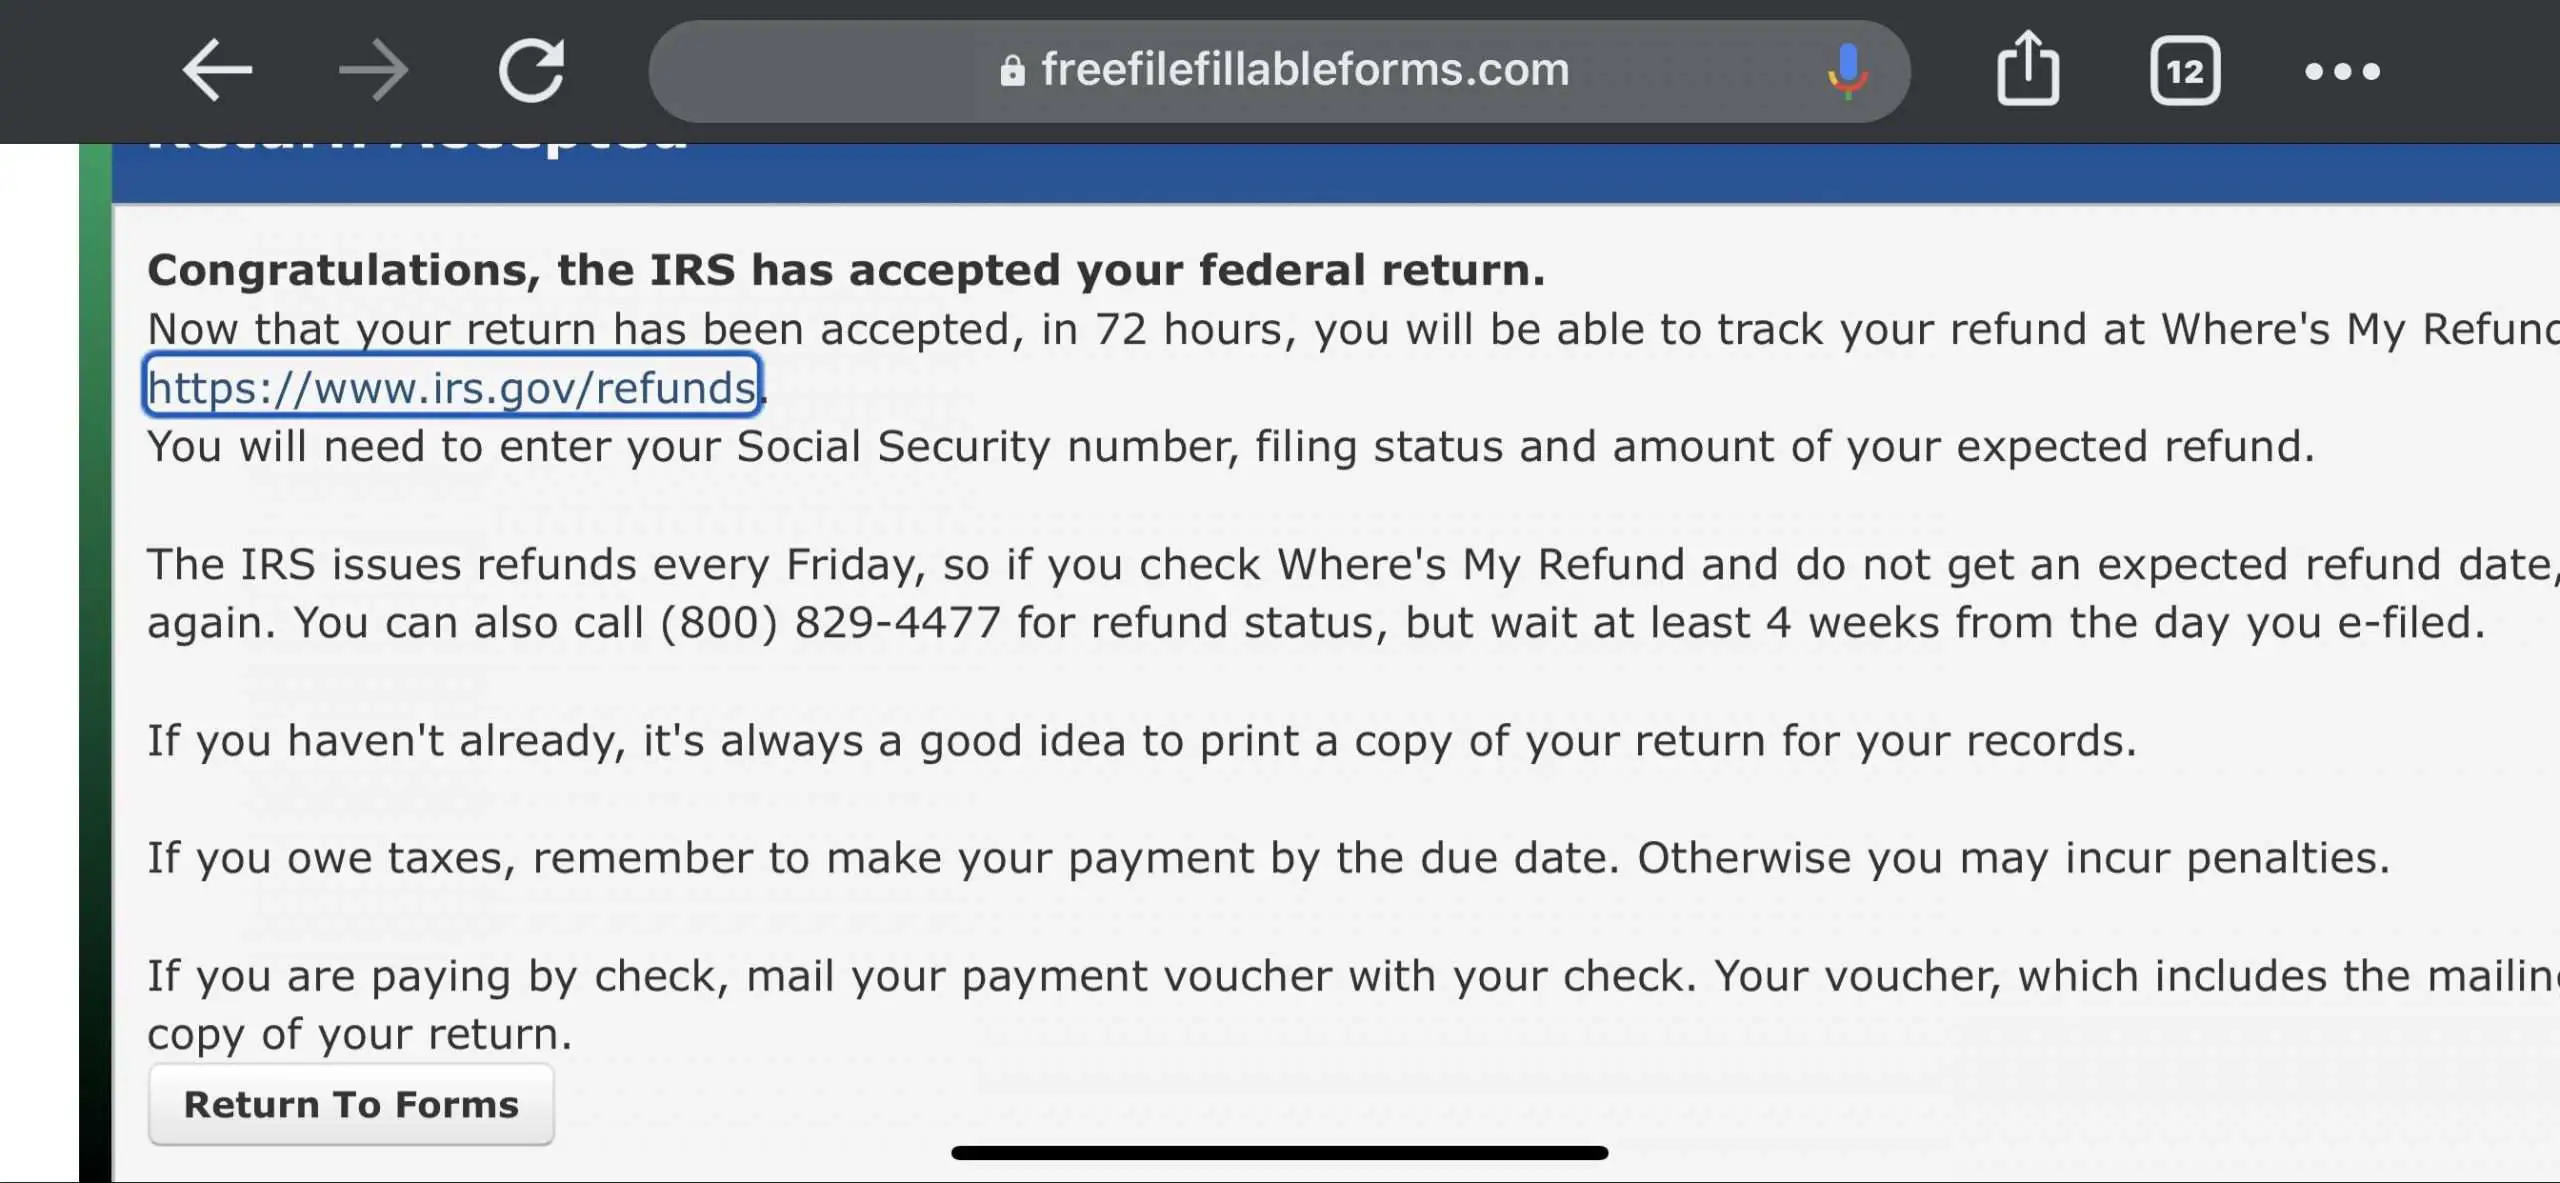 Non filer April 14. I filed as non filer April 14. Put in my bank info ...